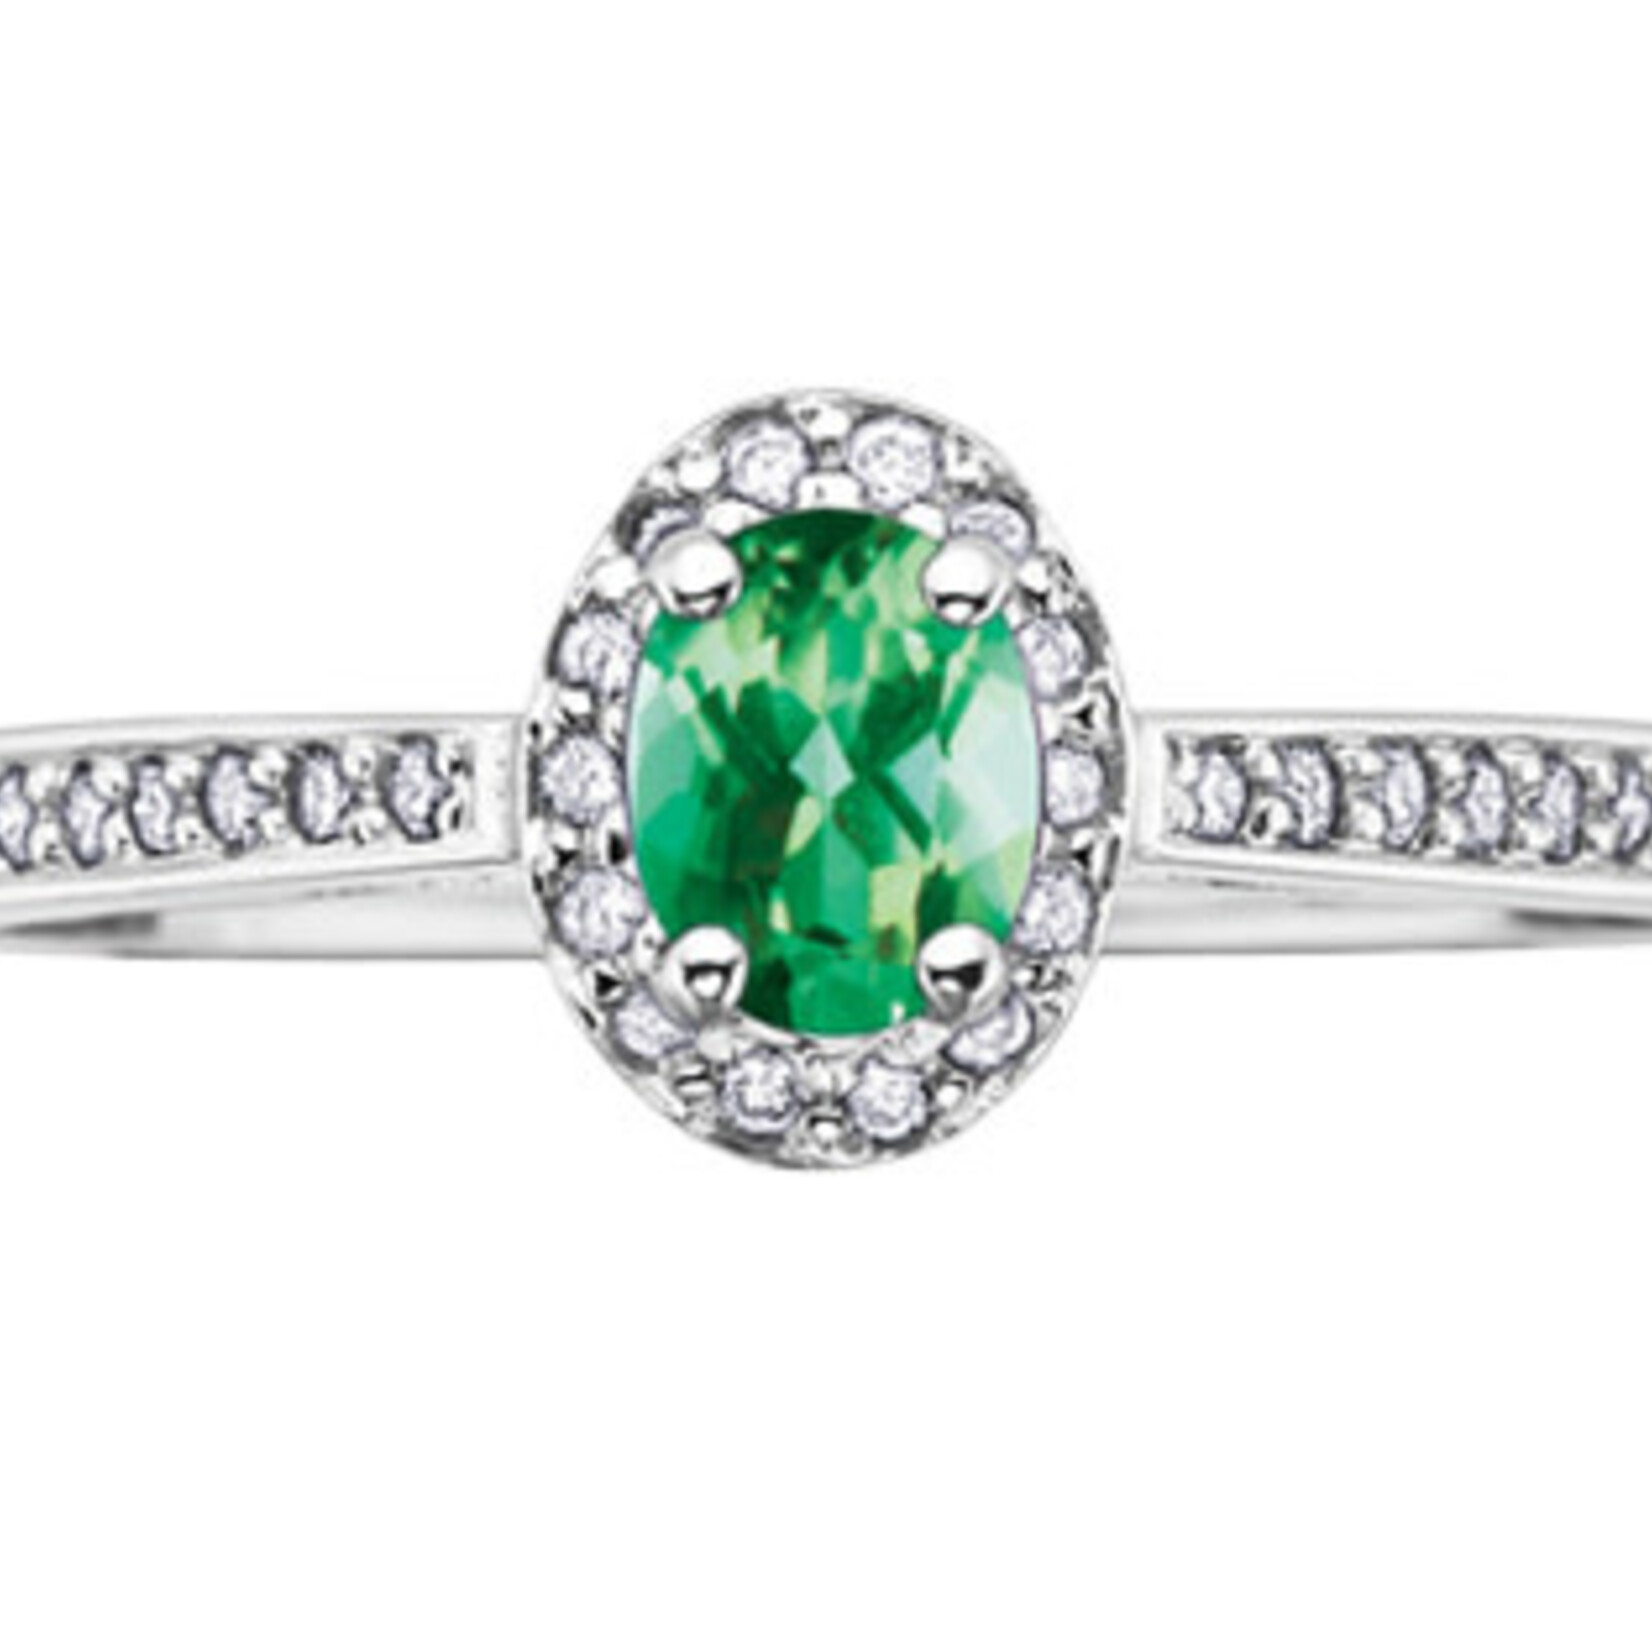 10K WG 1 Emerald 5x4mm 0.13ctw Diamond Ring